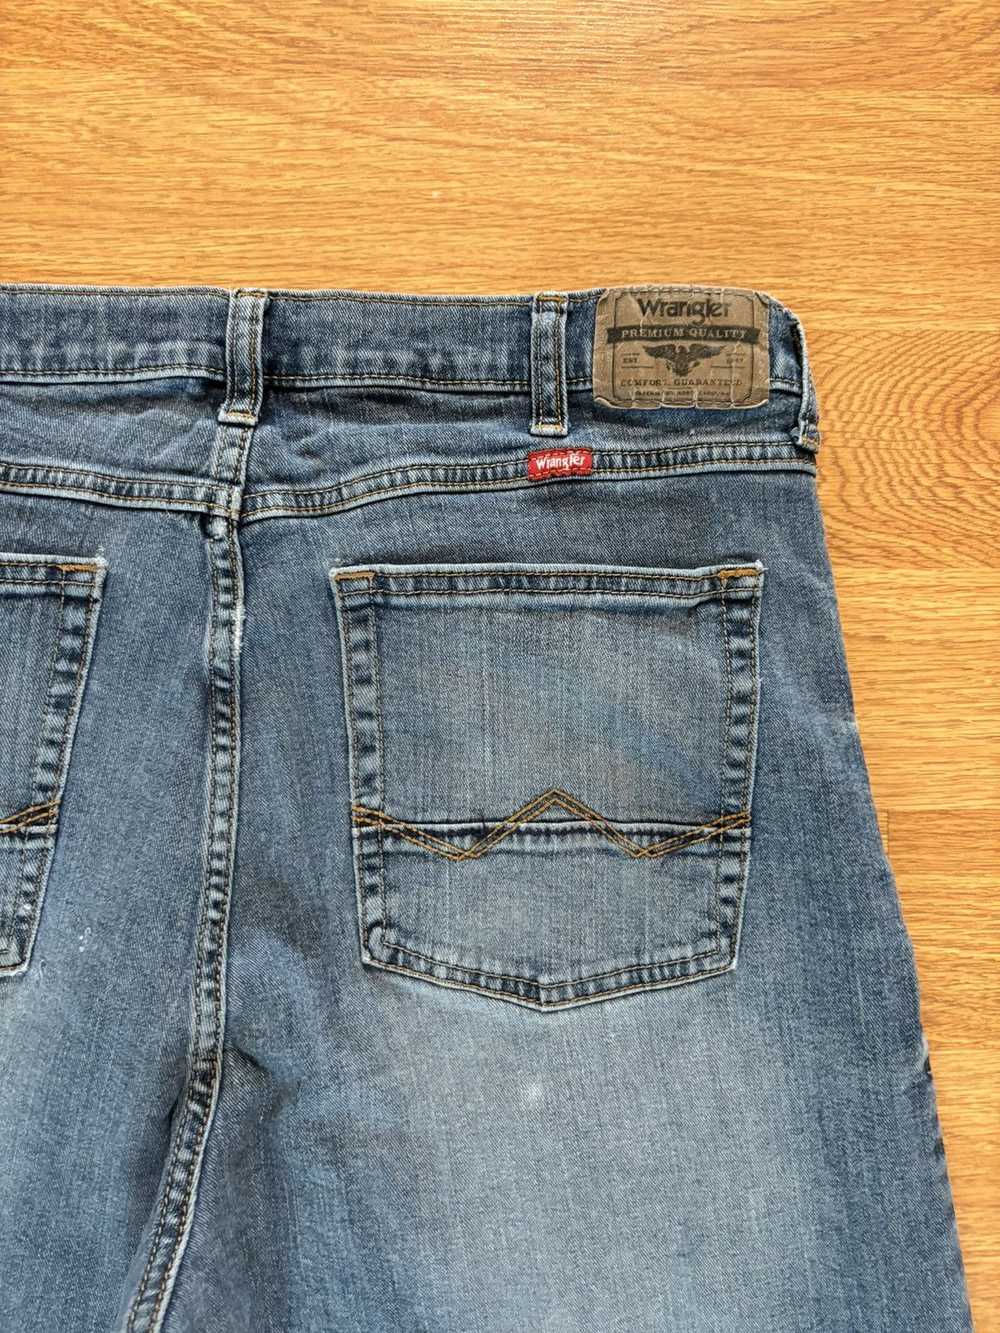 Wrangler vintage streetwear wrangler jeans - image 3